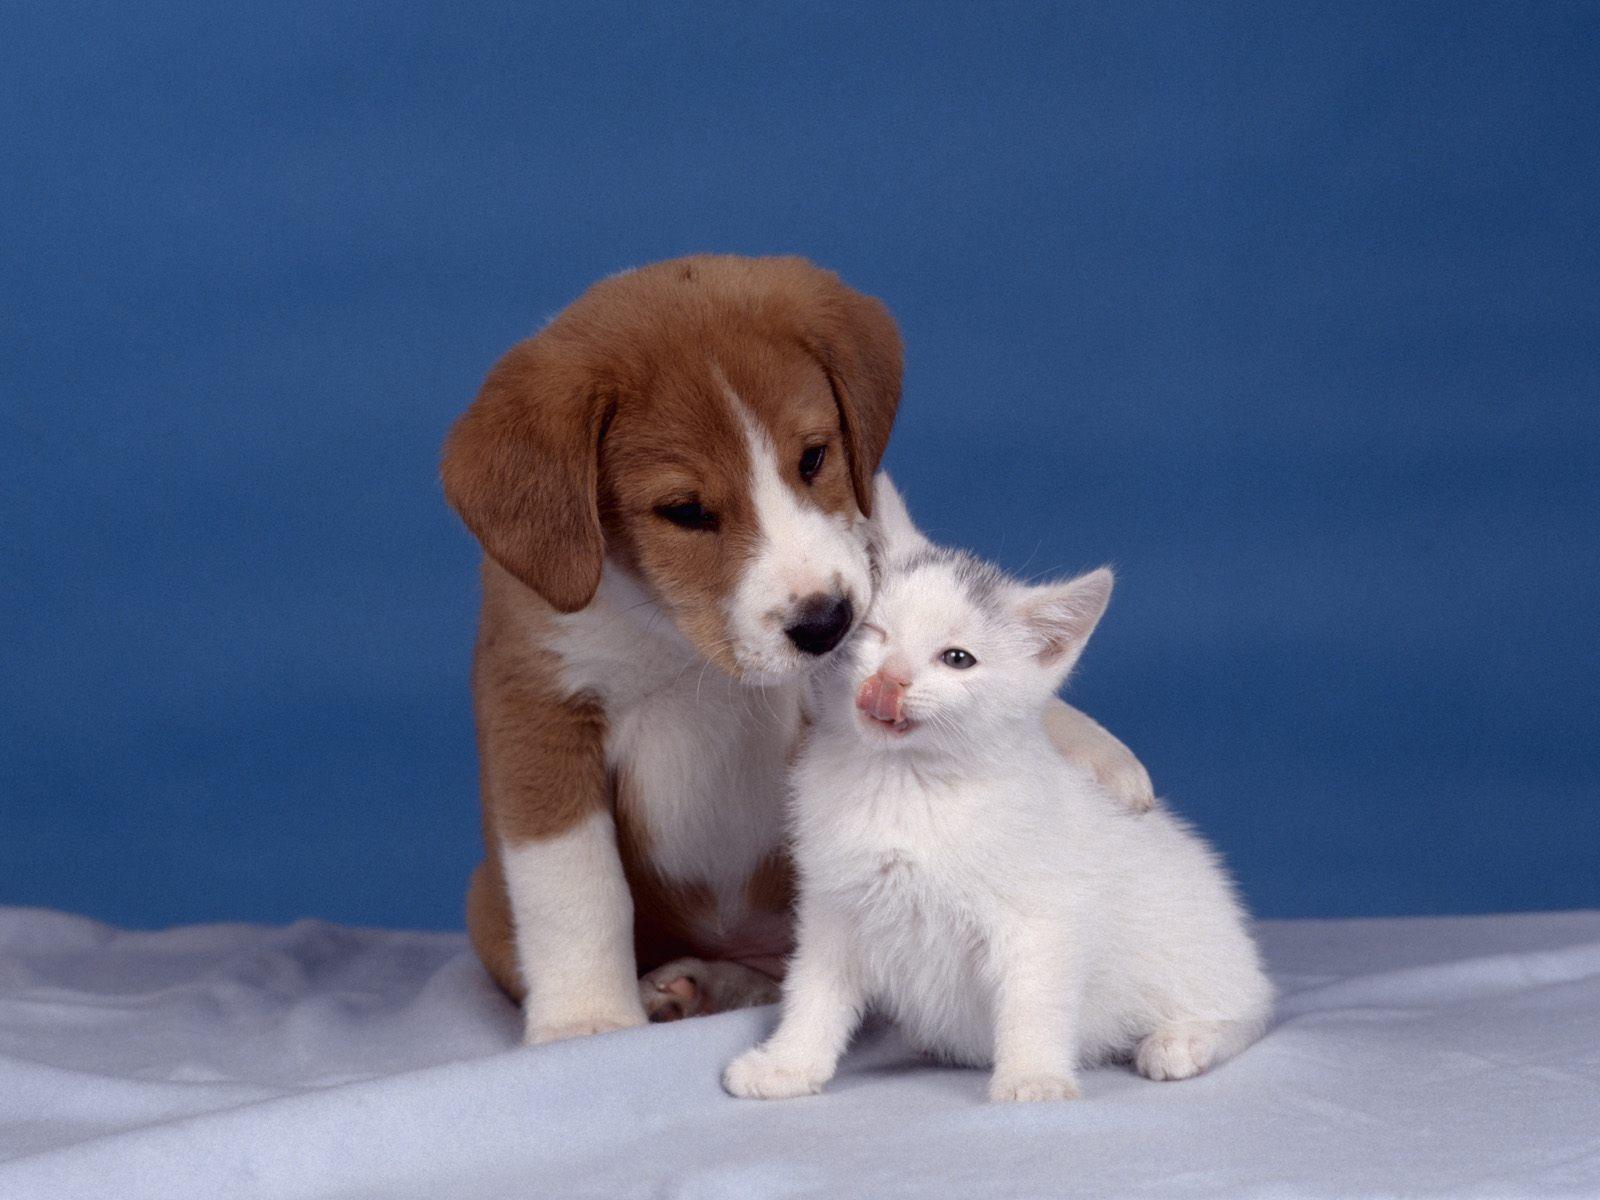 Kitten and Puppy - Kittens Wallpaper 12929269 - Fanpop